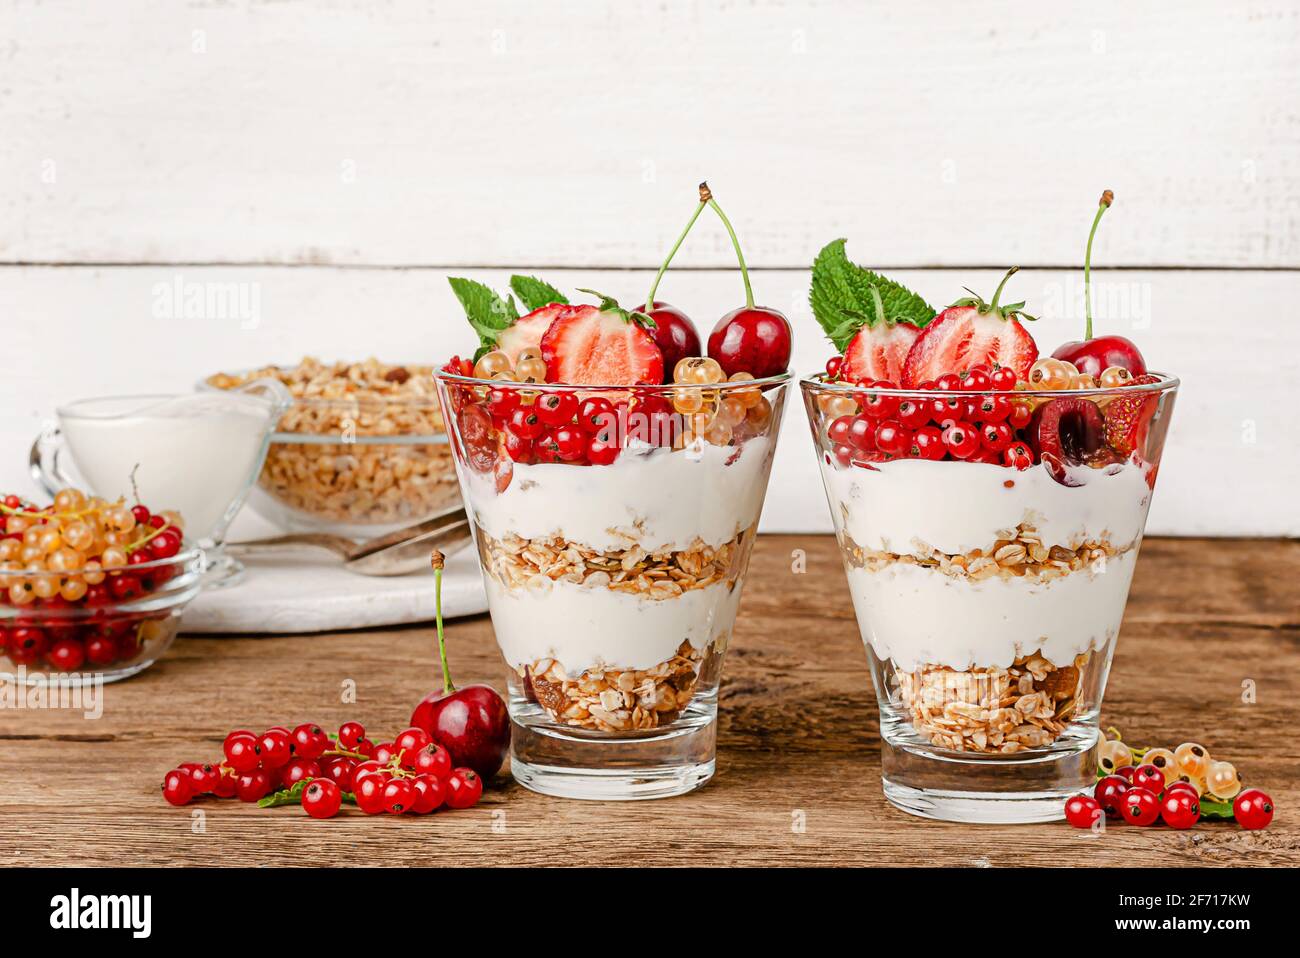 Granola yogurt parfait with fresh berries on wooden background. Copy space Stock Photo